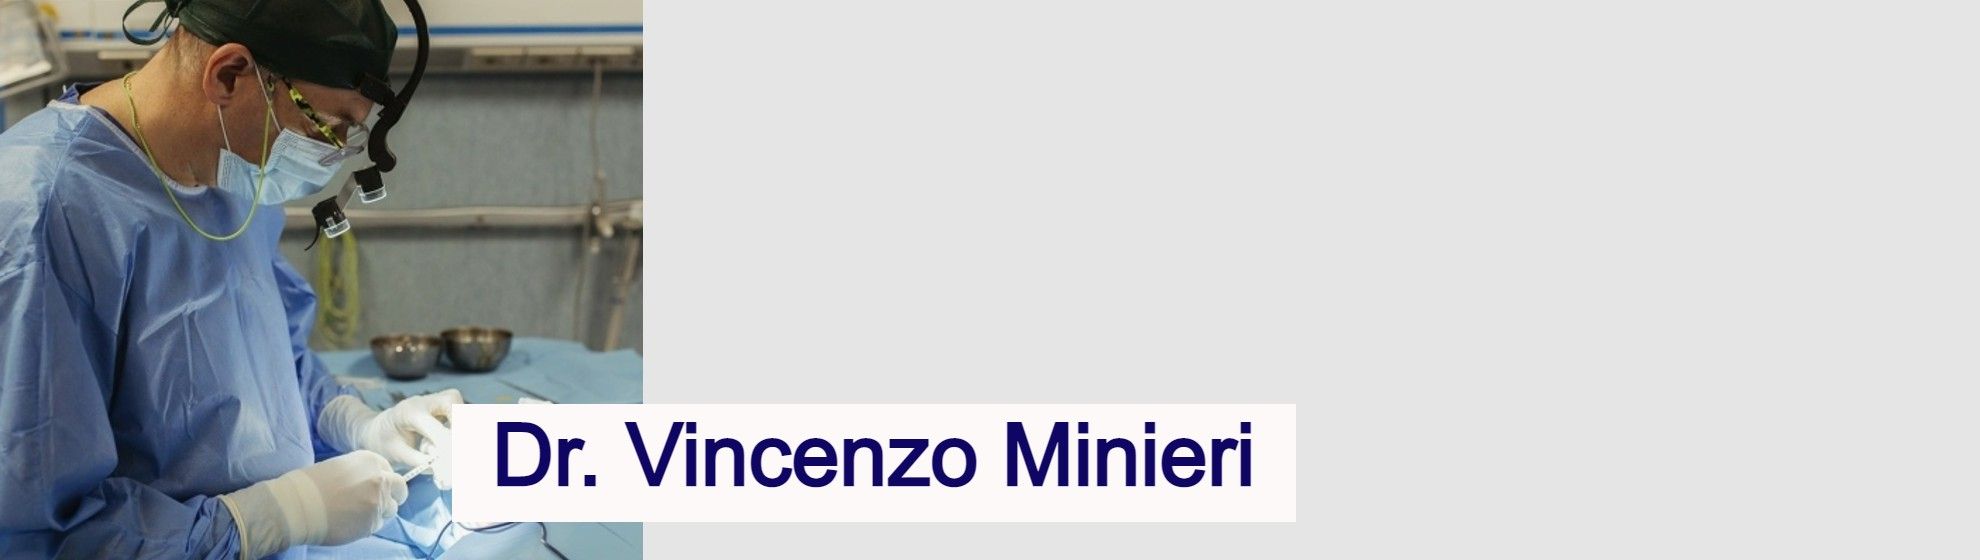 Dott. Vincenzo Minieri